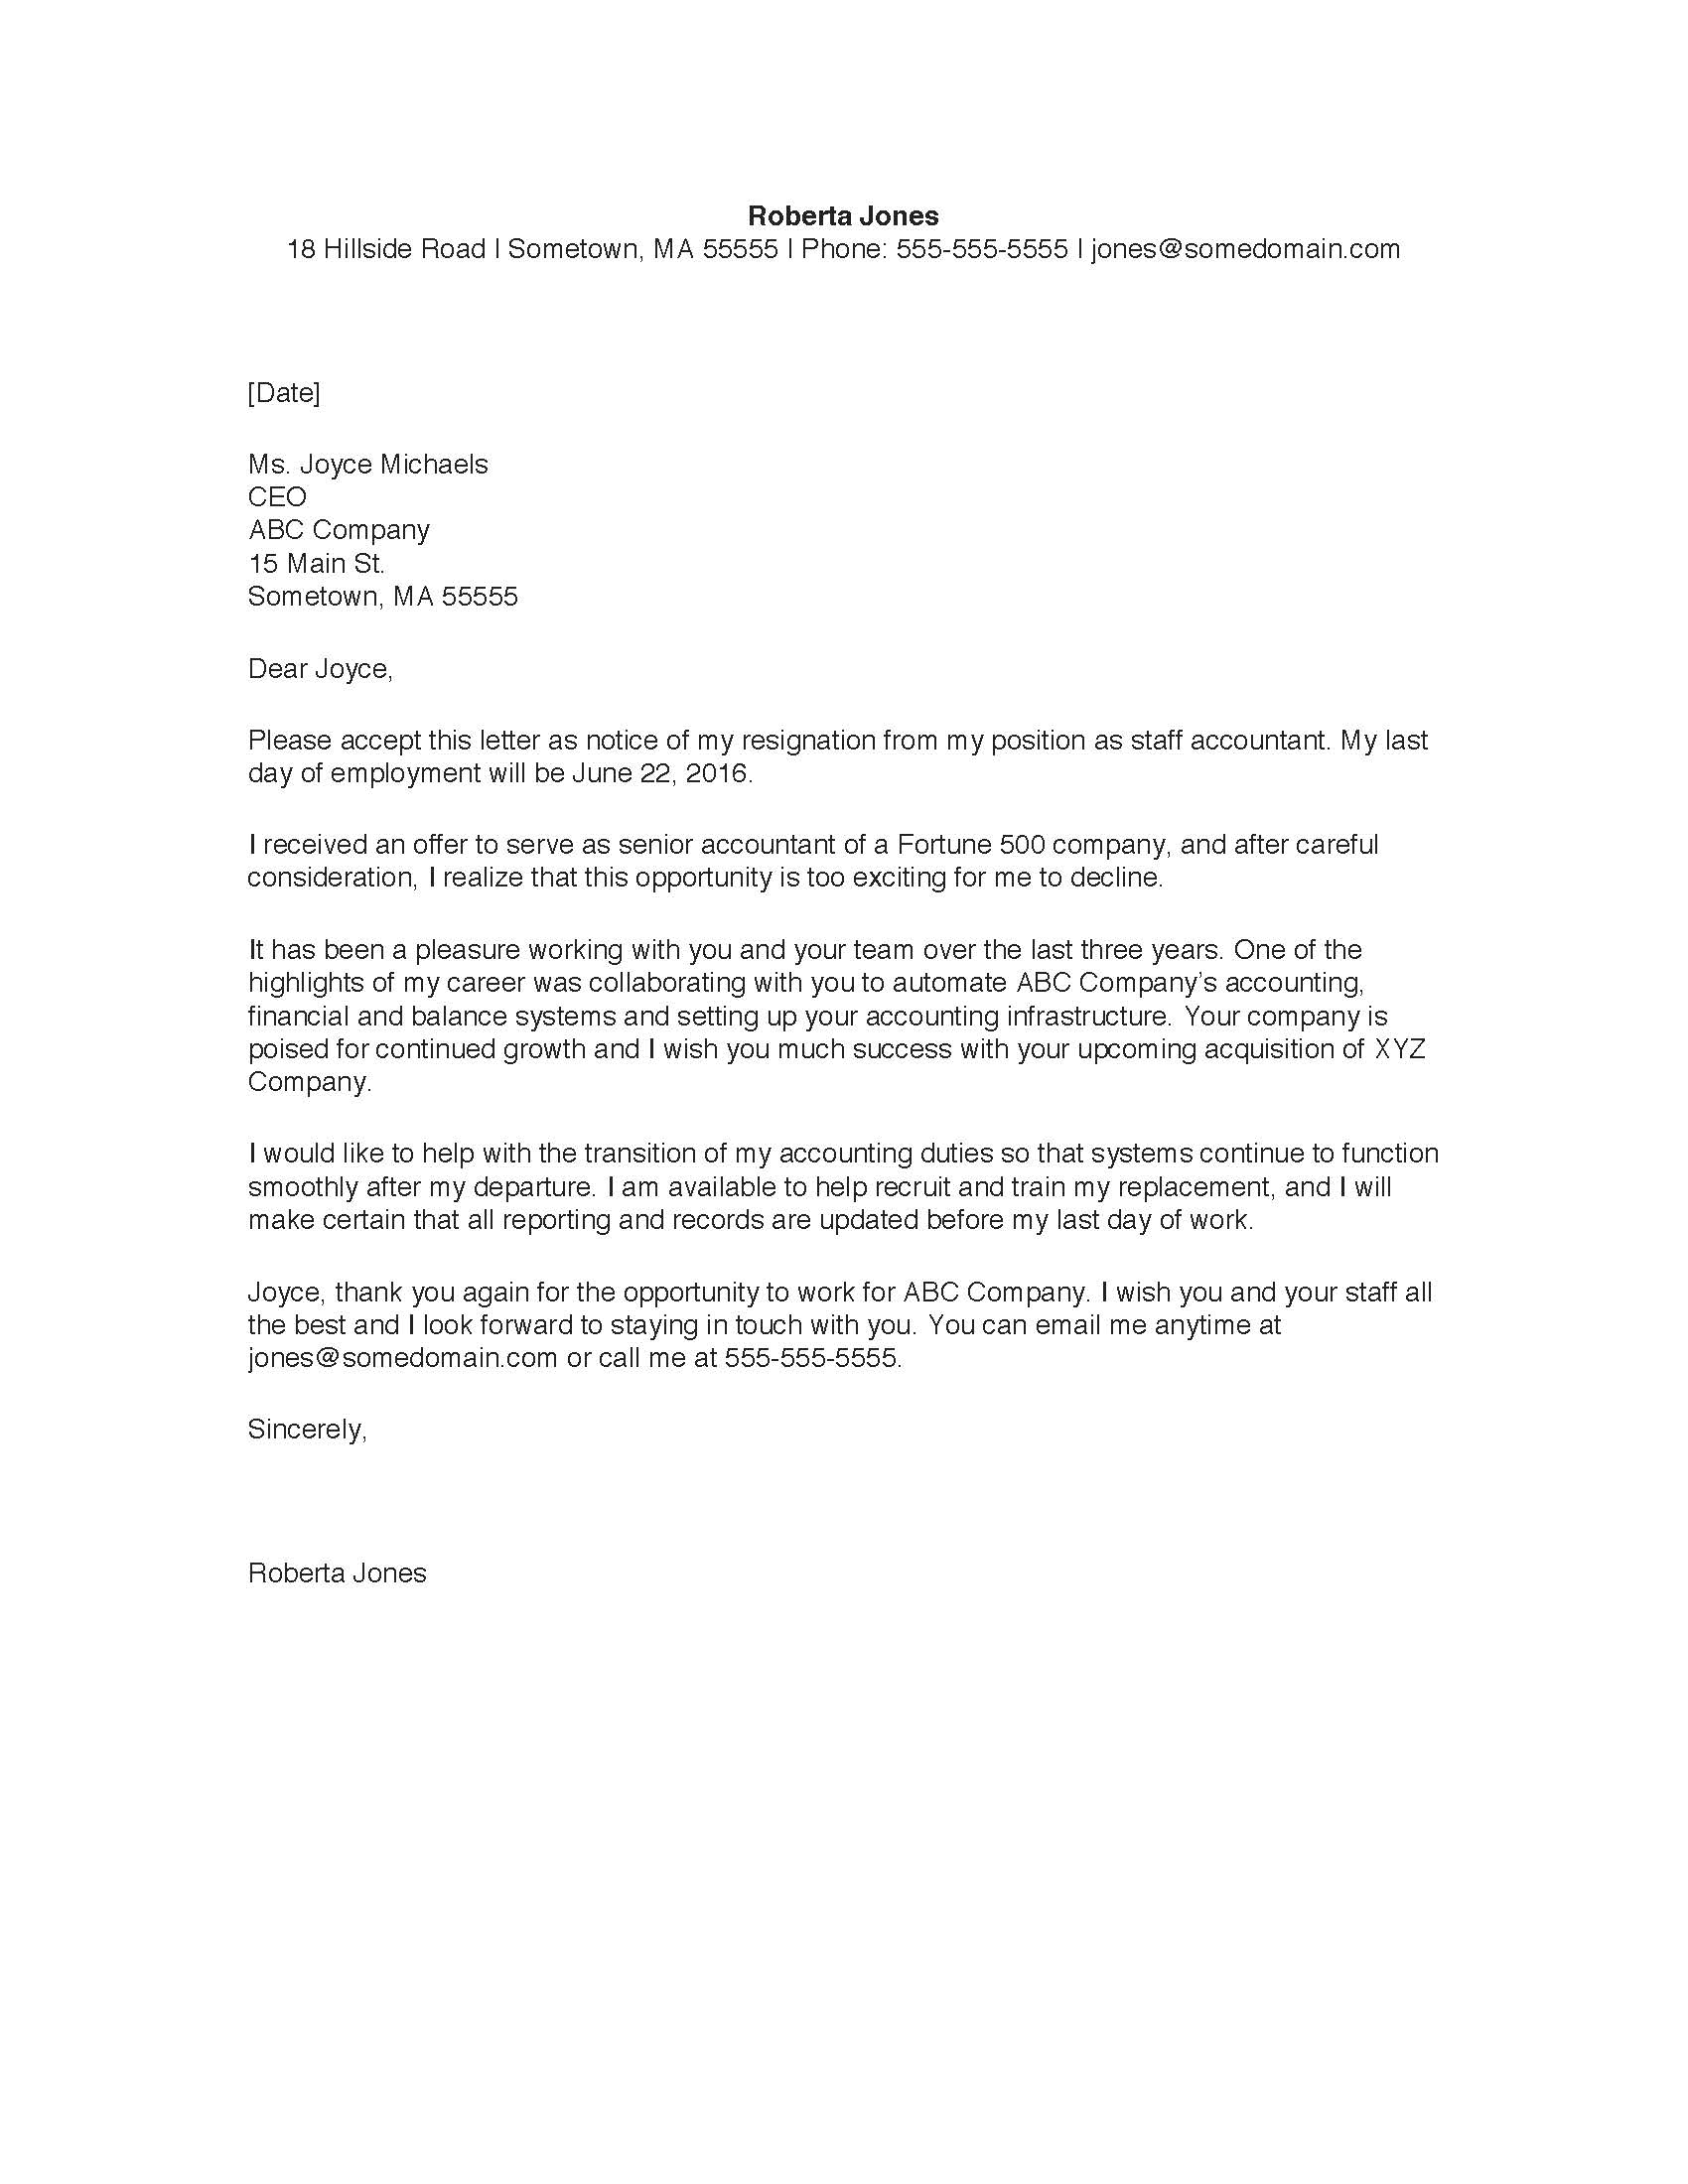 Formal Resignation Letter Template Sample - PDF, Word